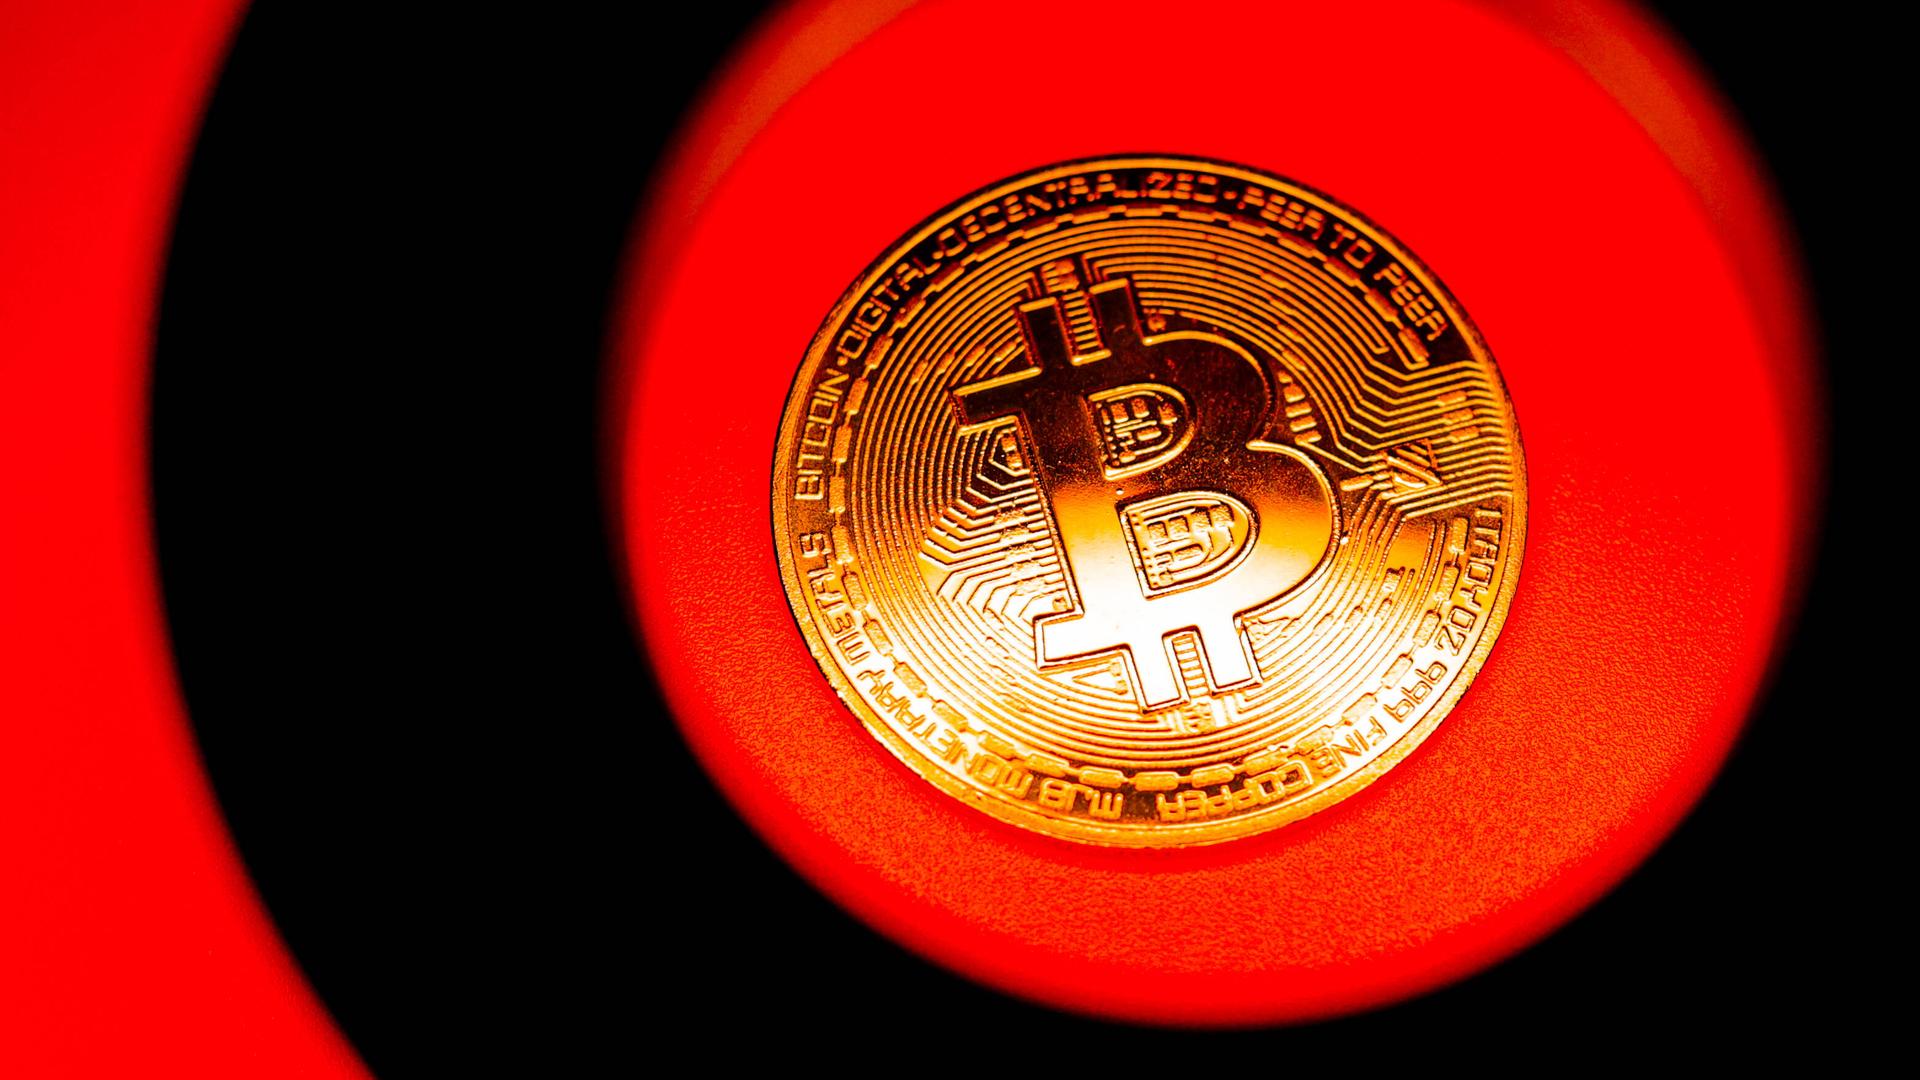 Symbolbild: Bitcoin auf rotem Kreis in Nahaufnahme. 